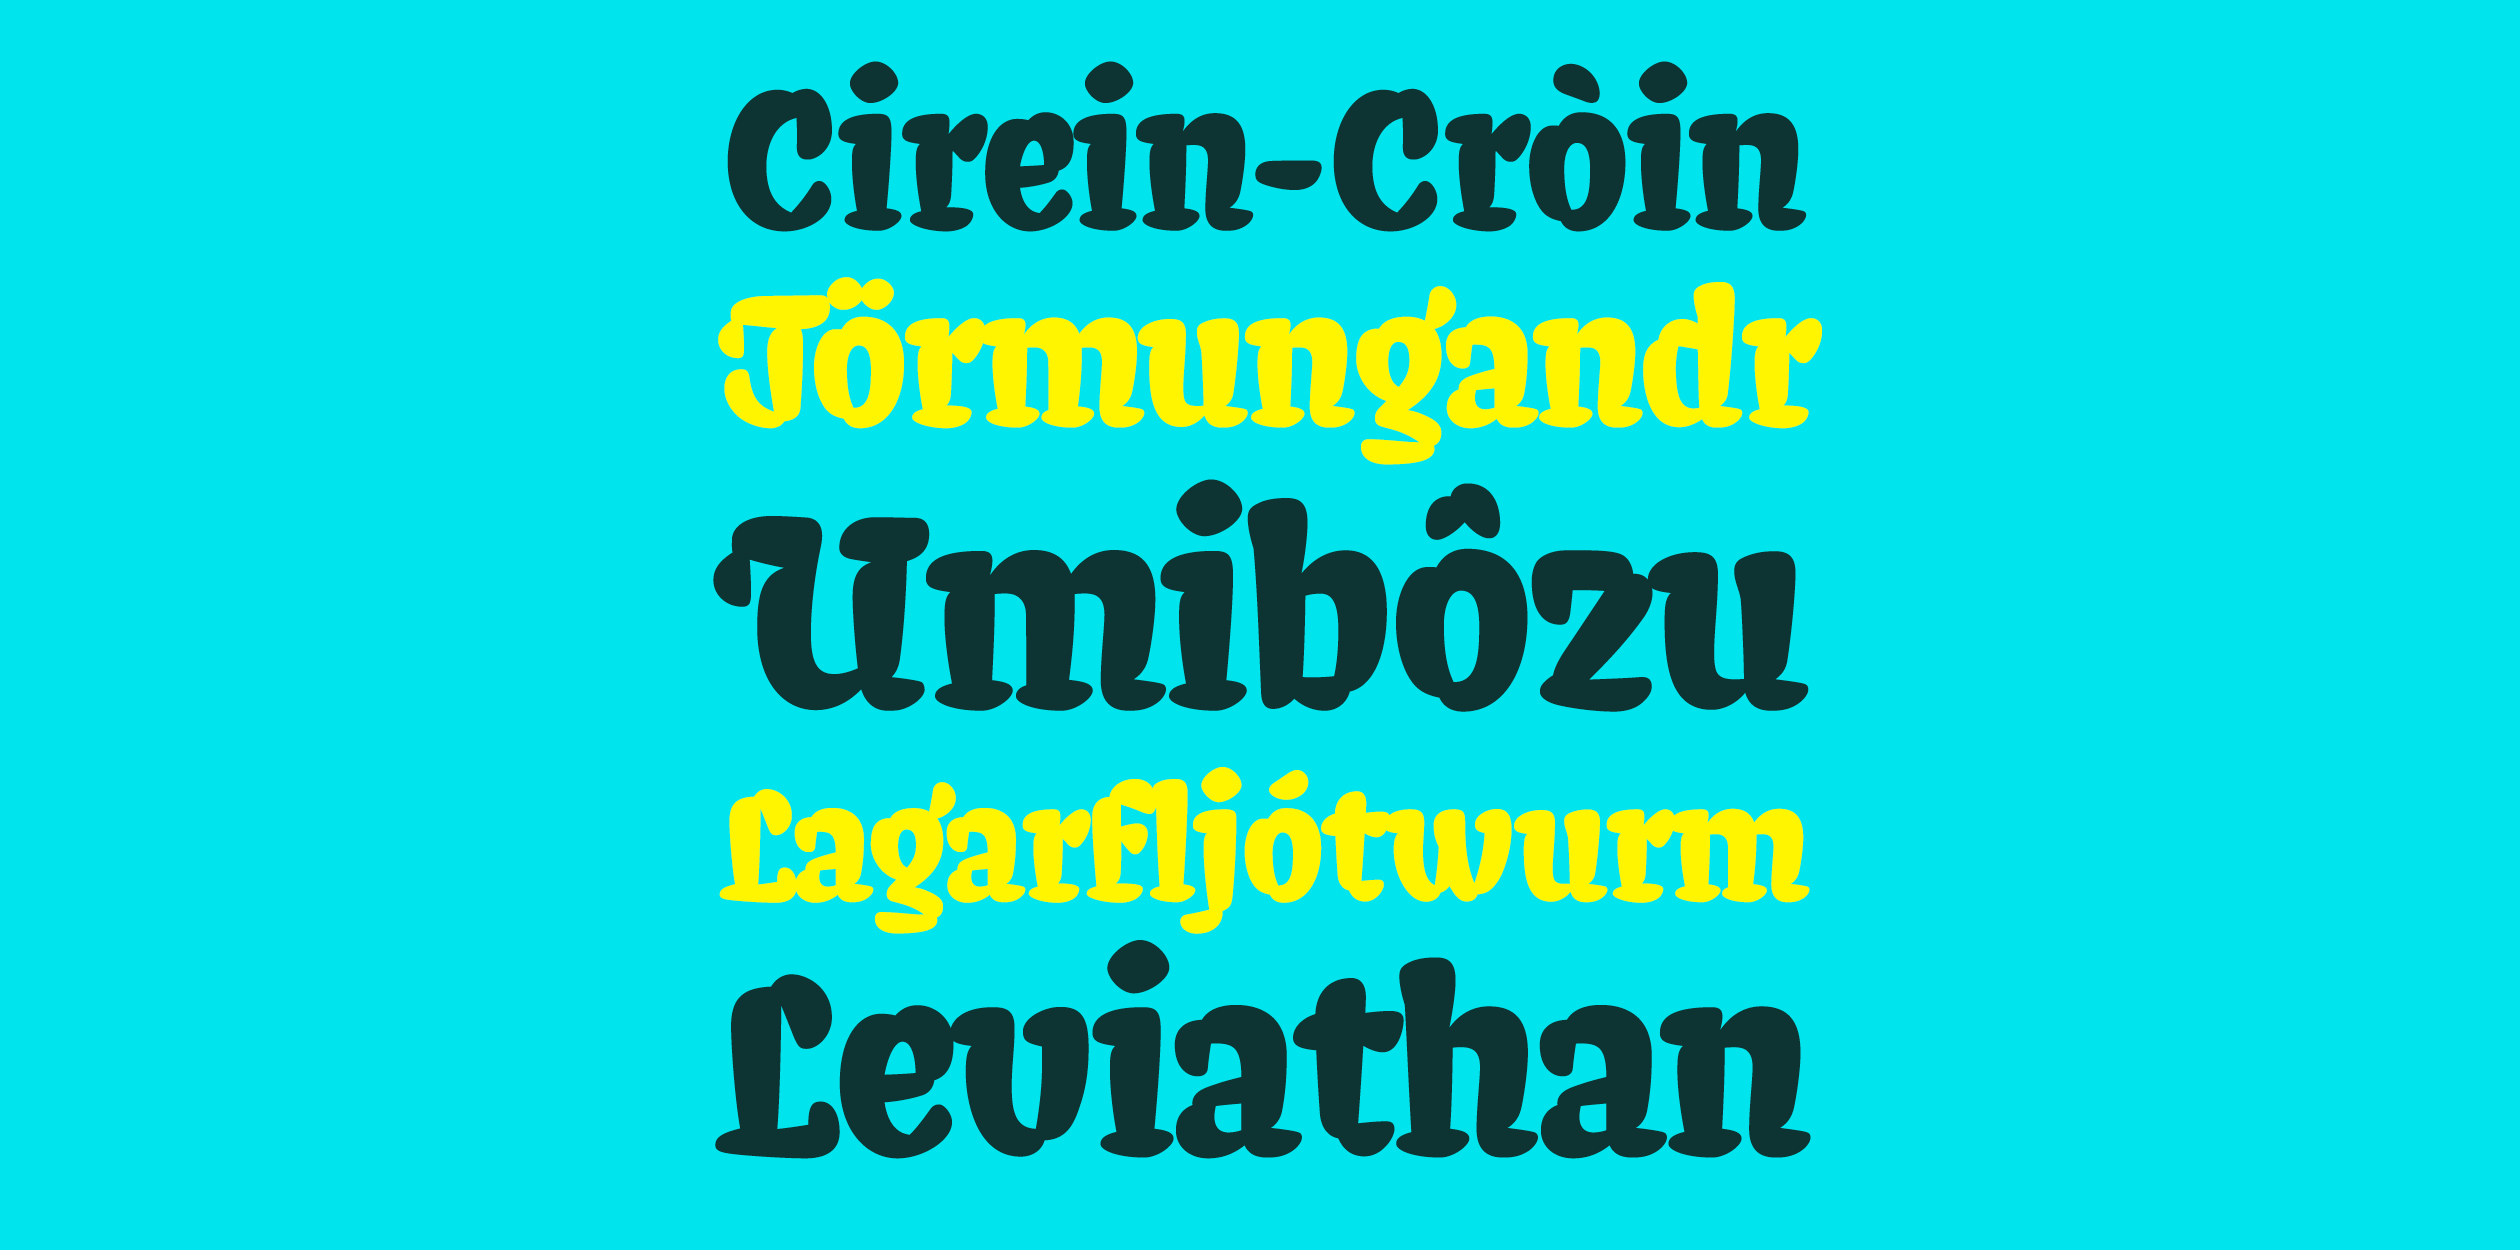 Image of Ligan typeface project from Tilmann Hielscher